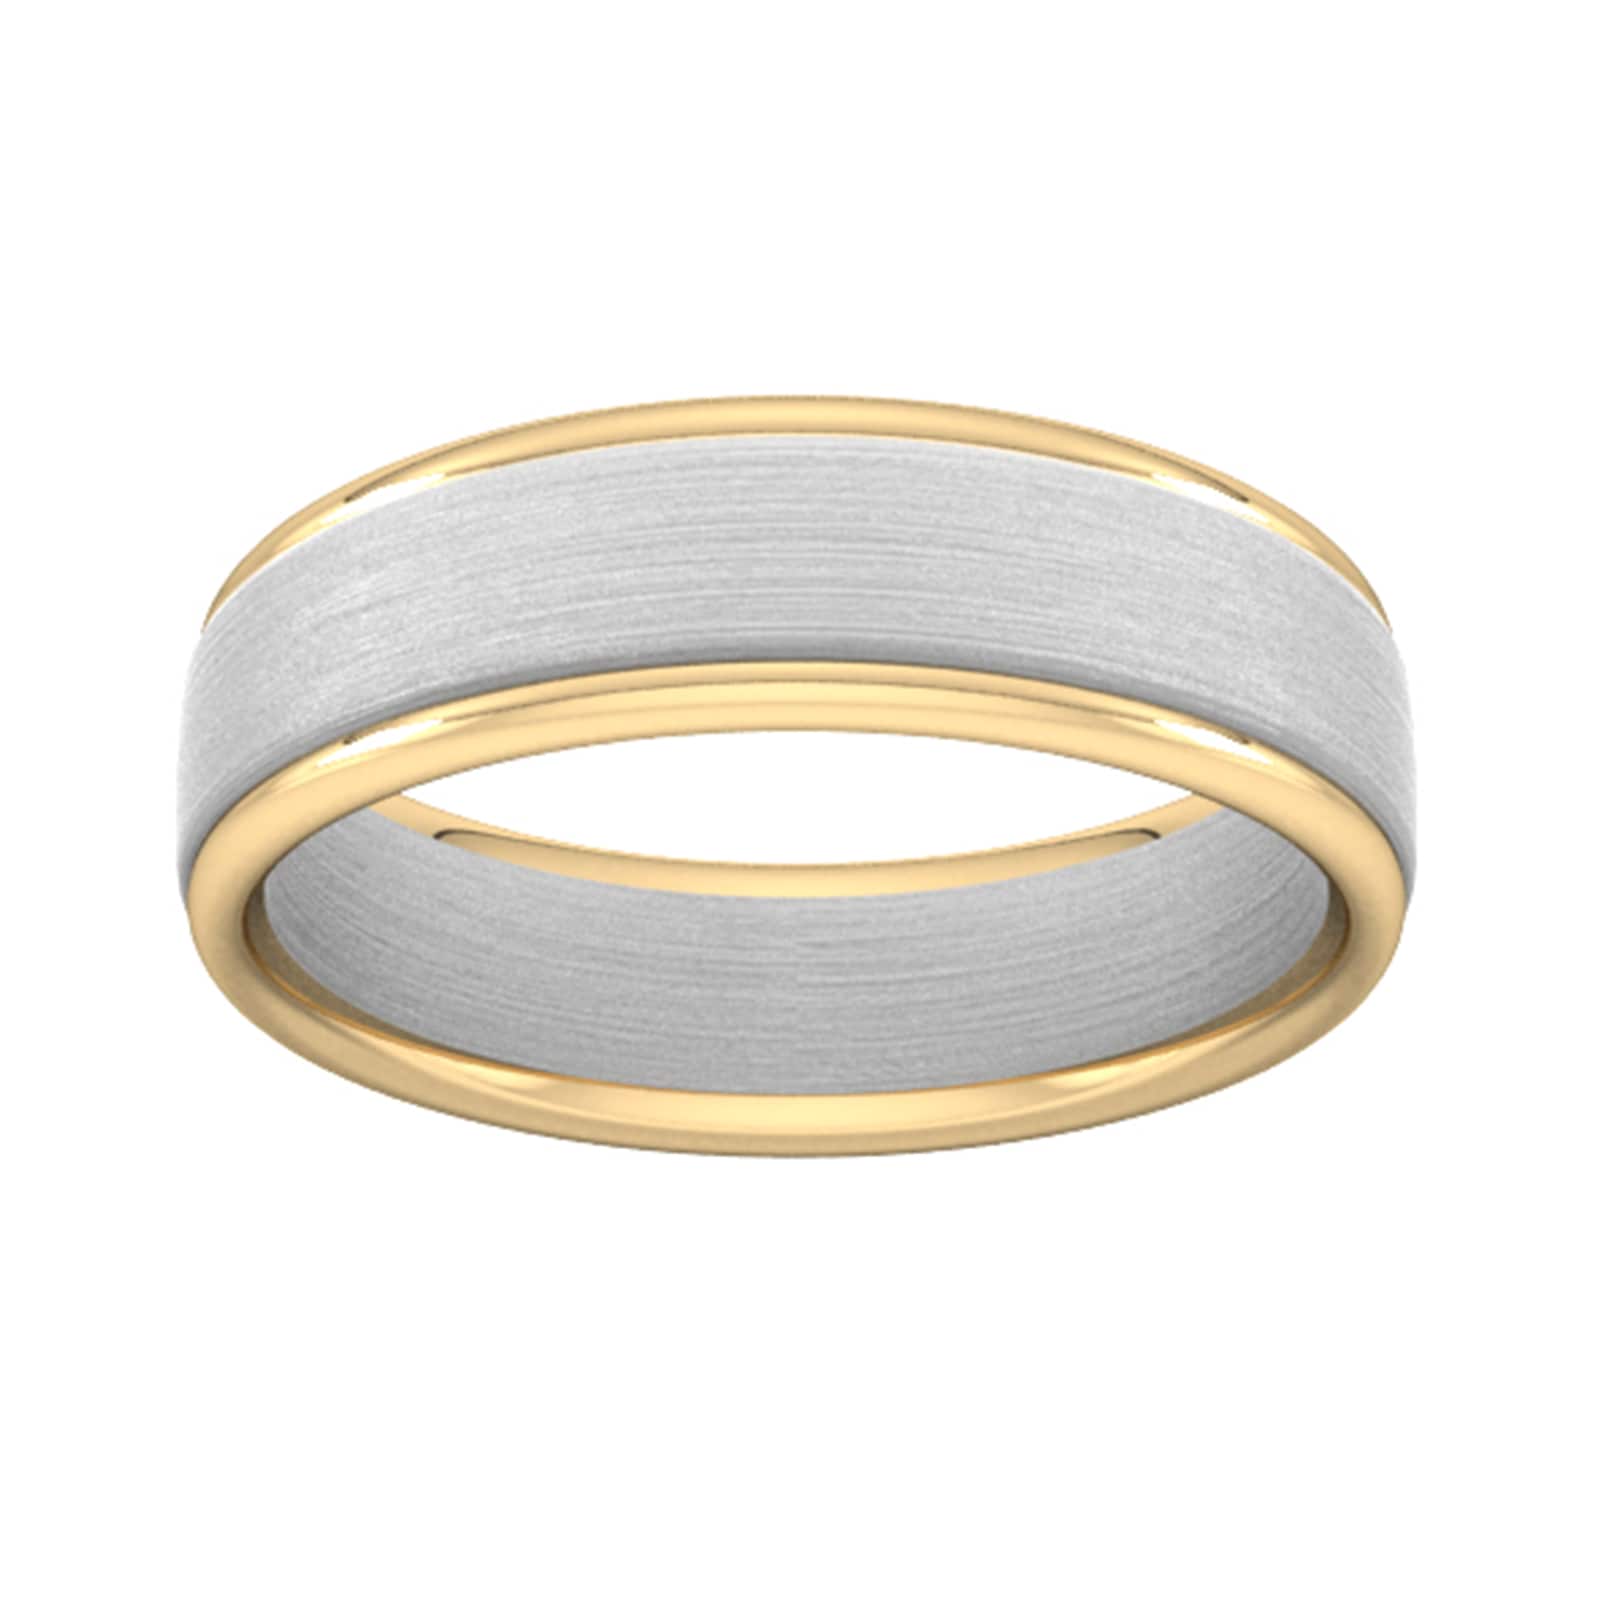 6mm Wedding Ring In 9 Carat White & Yellow Gold - Ring Size M